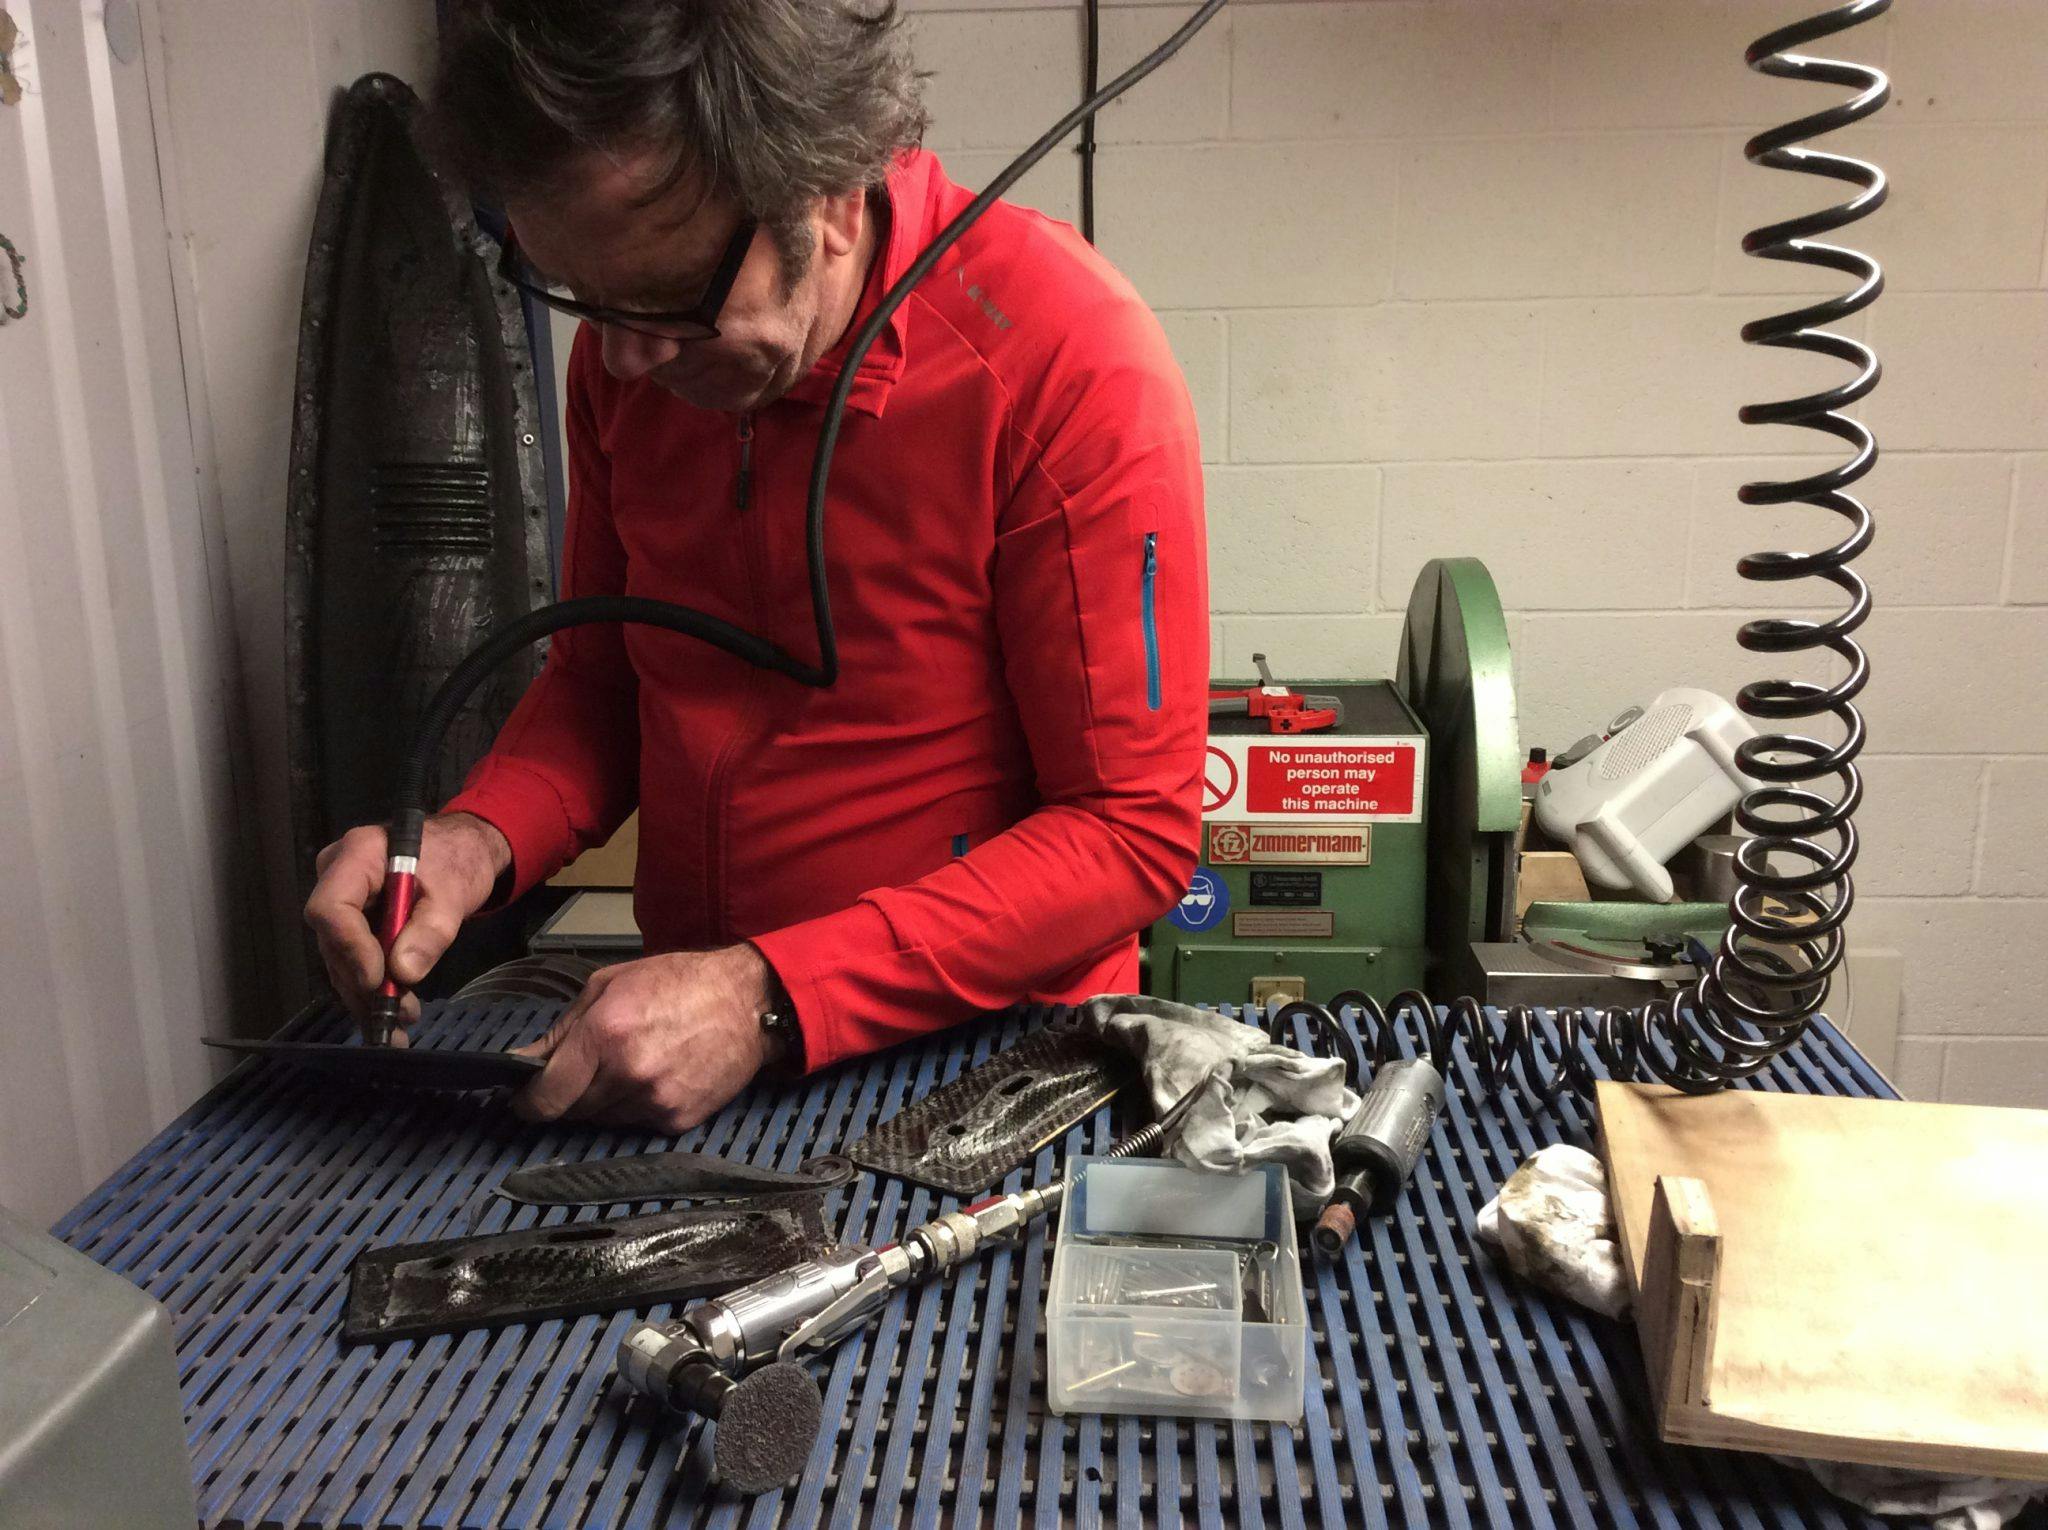 Formula 1 Mechanic Turned Artist Alastair Gibson at work detailing